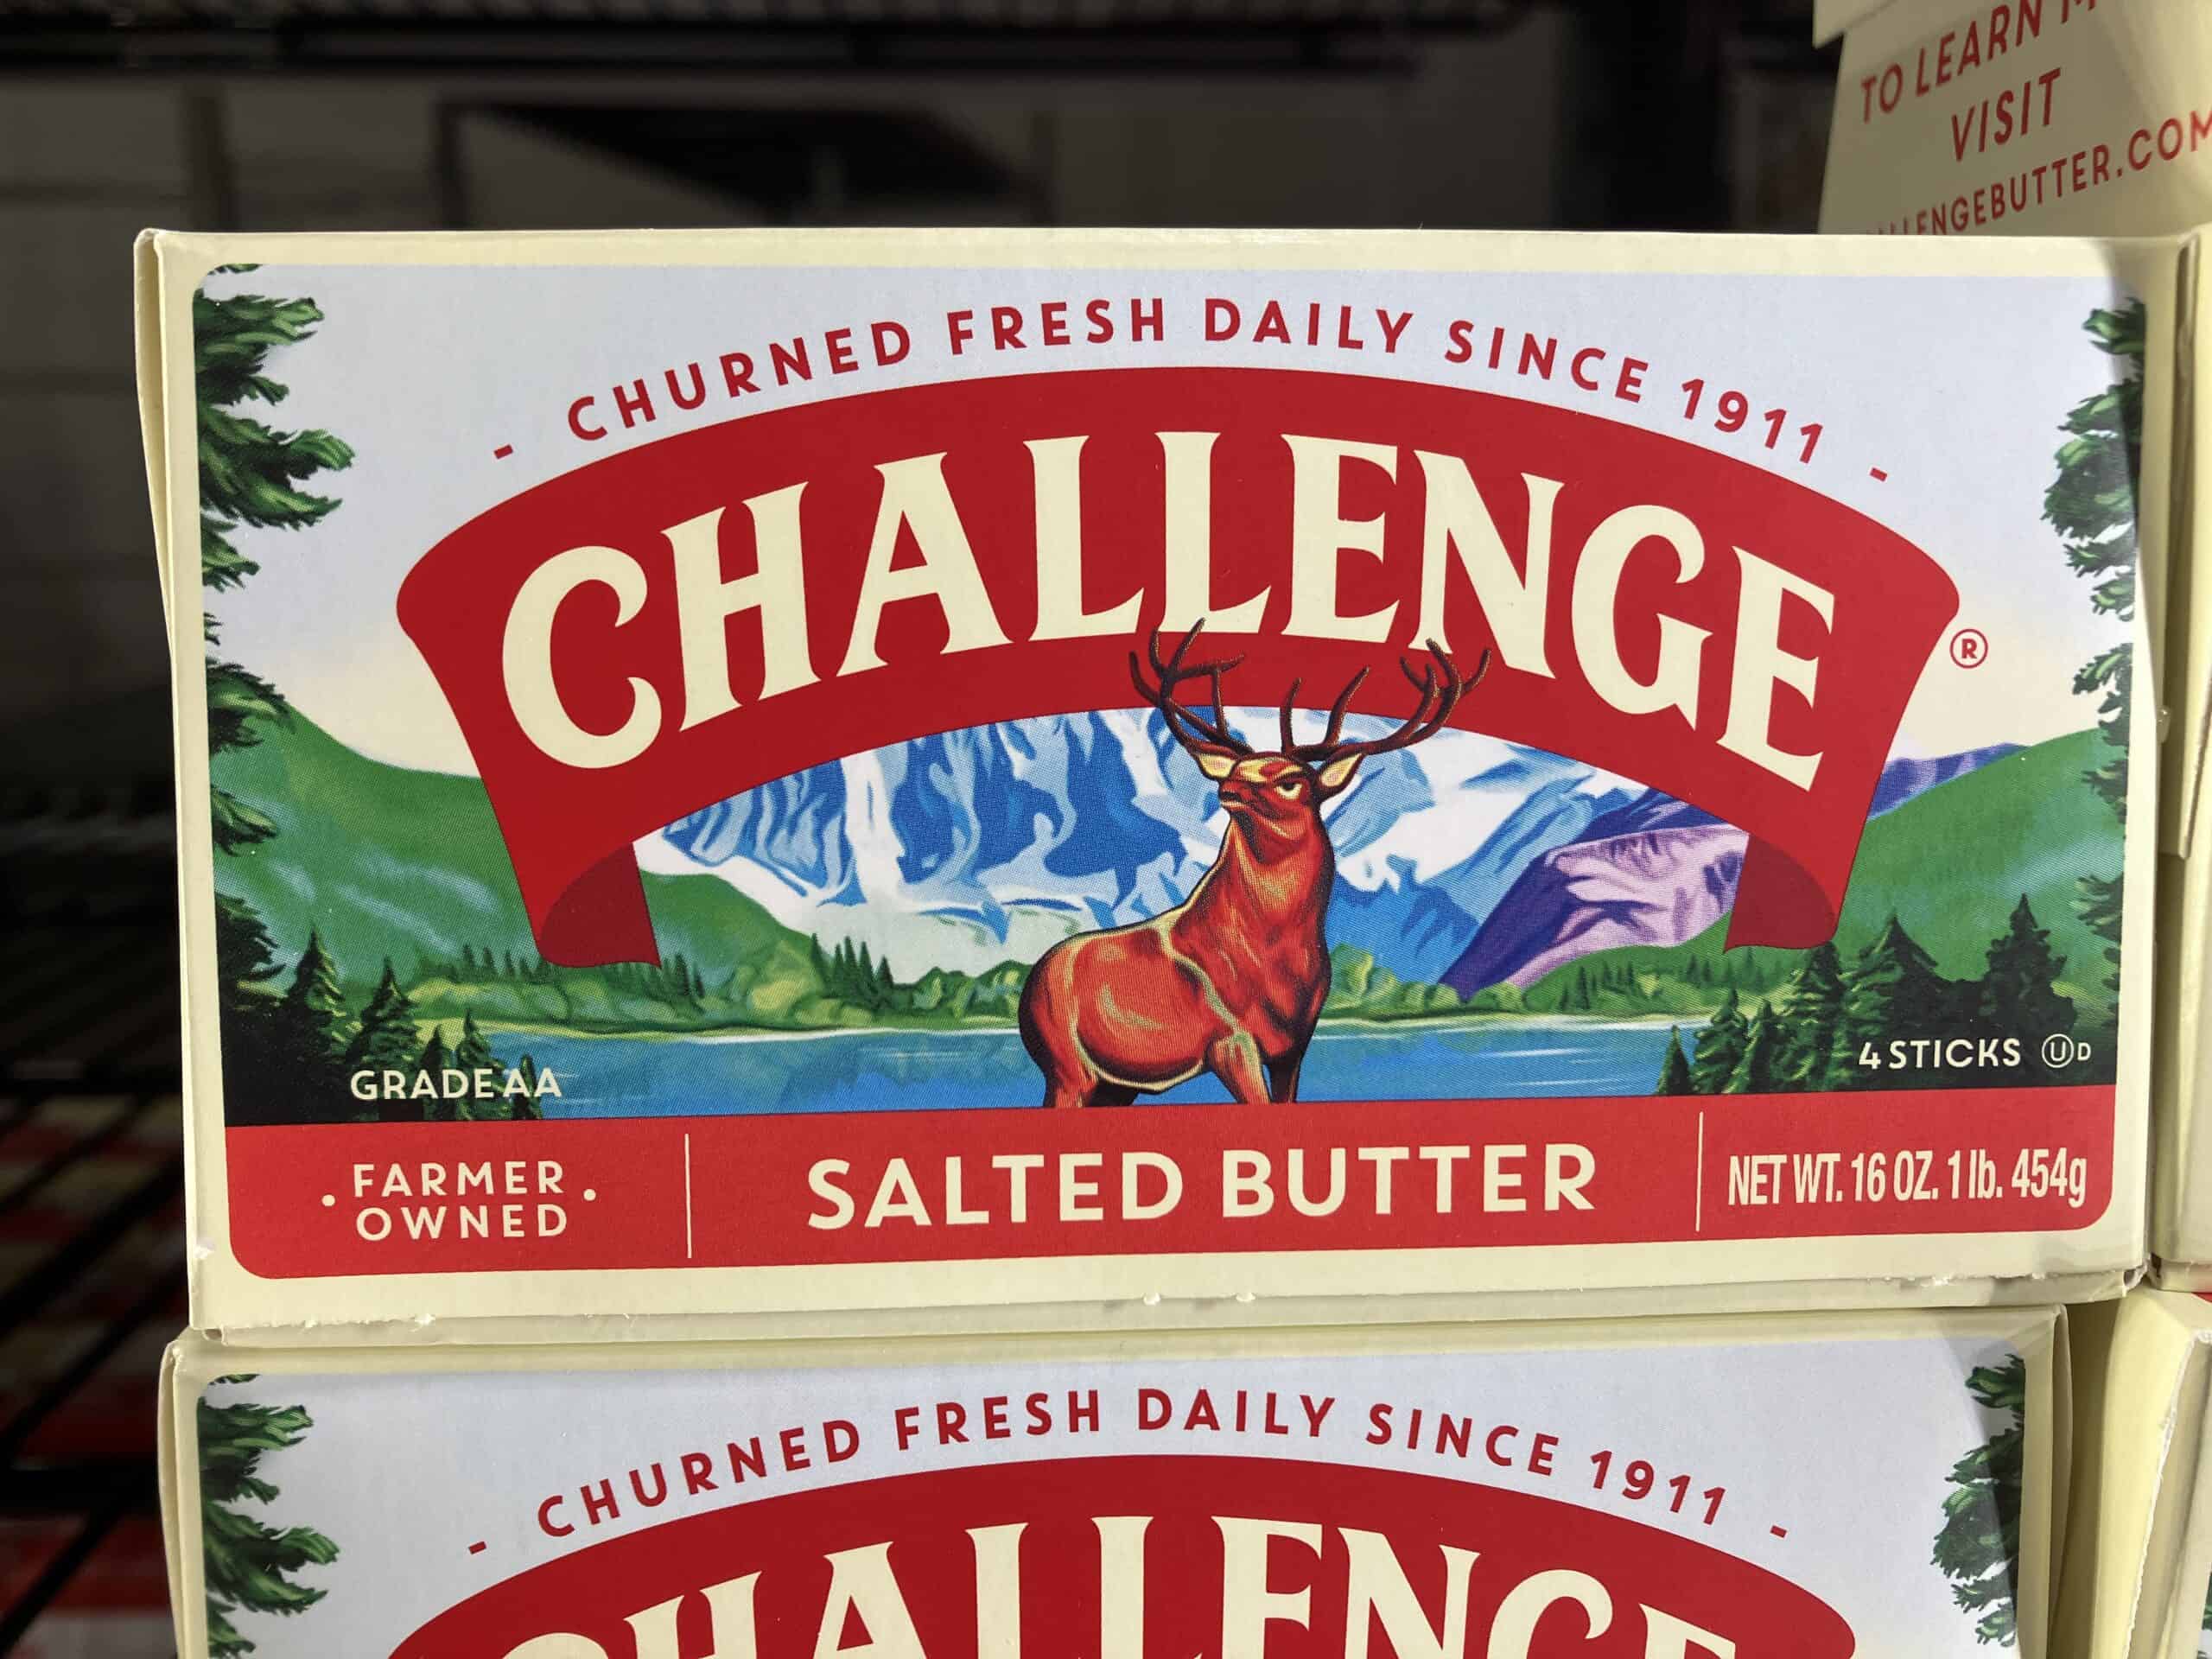 Challenge butter